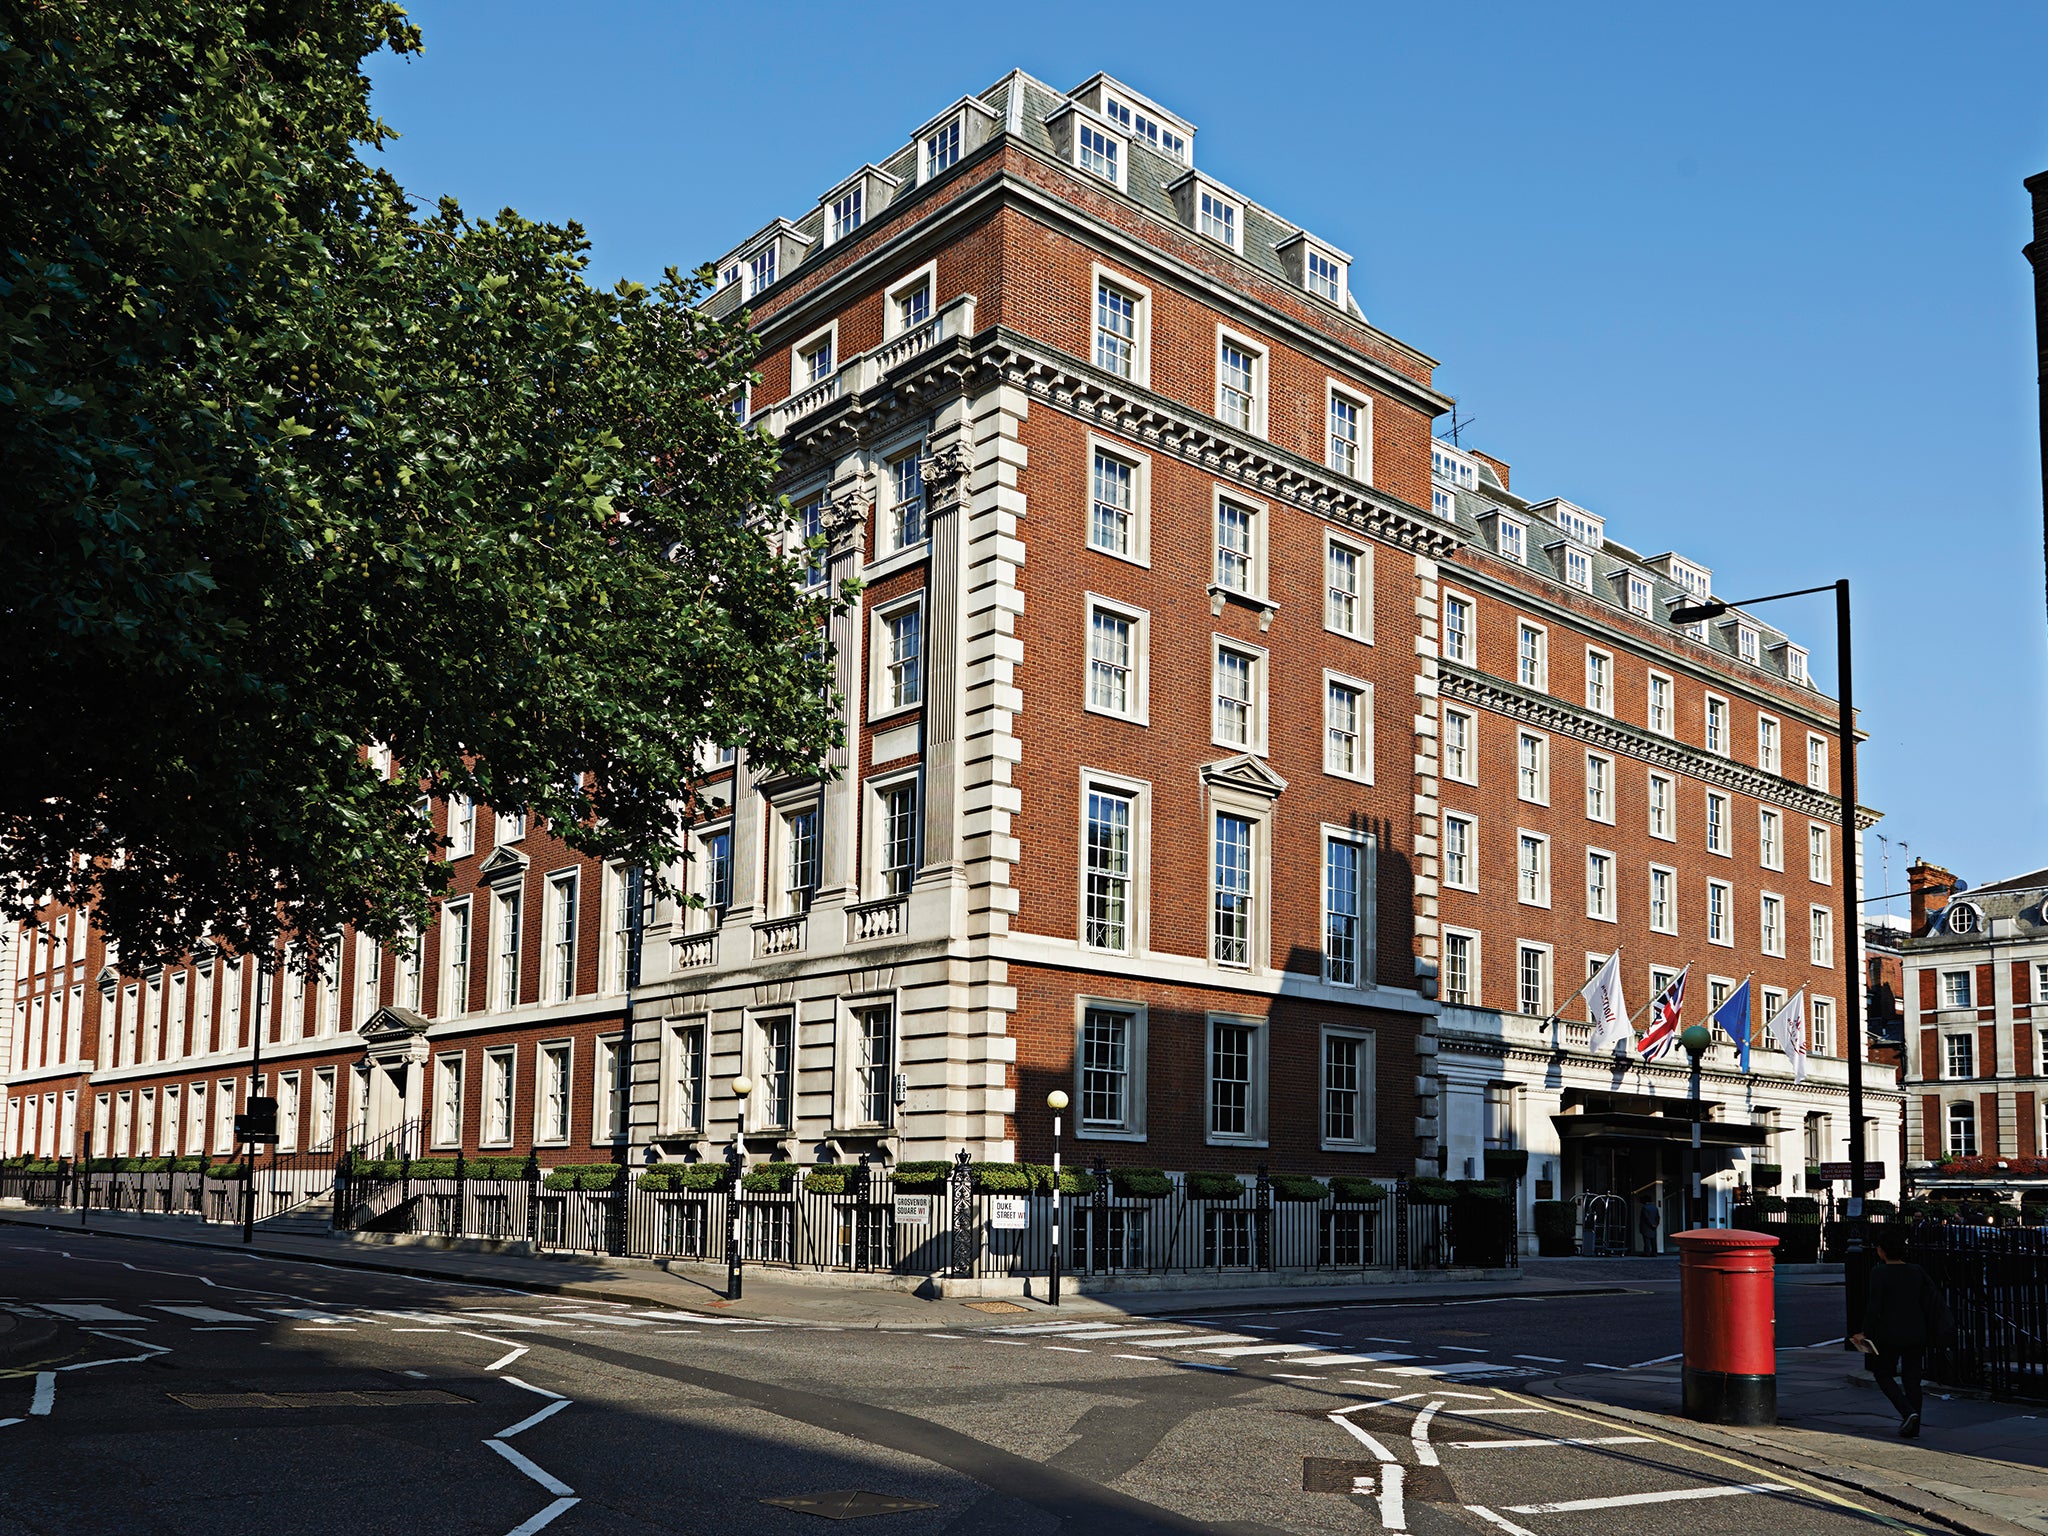 The Marriott Hotel in London